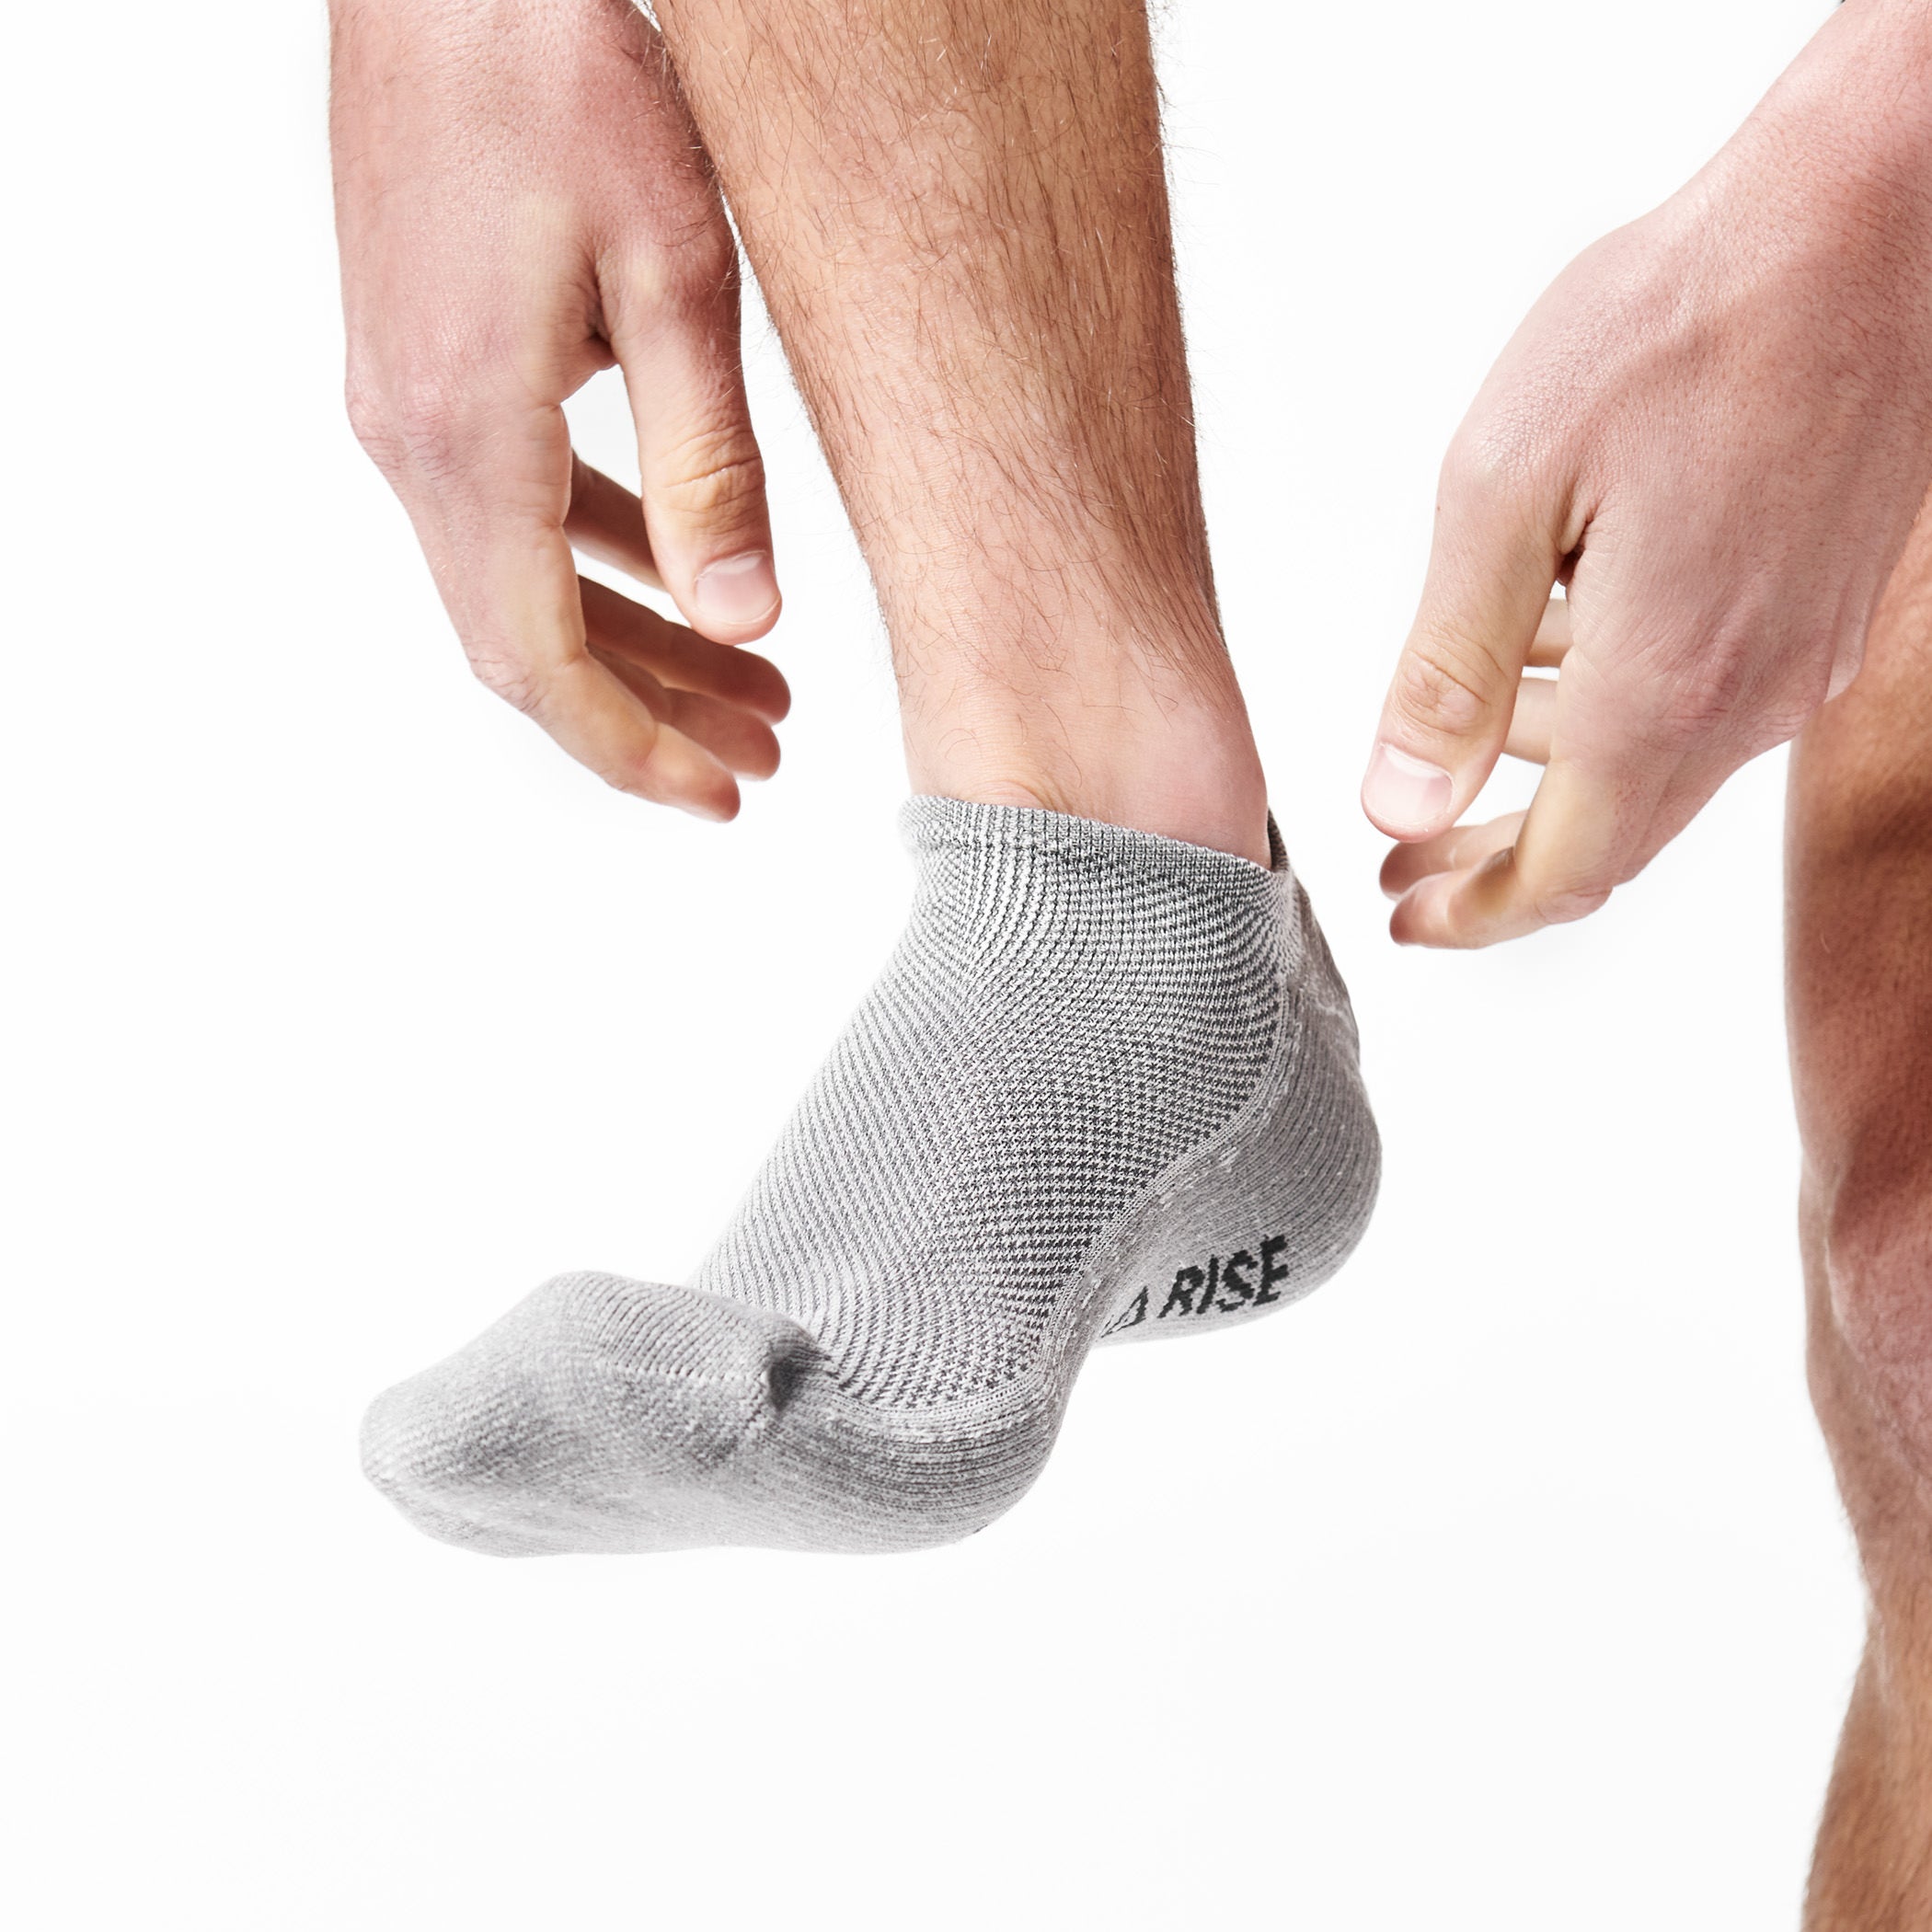 StrongCore Merino Socks - Low - Grey
